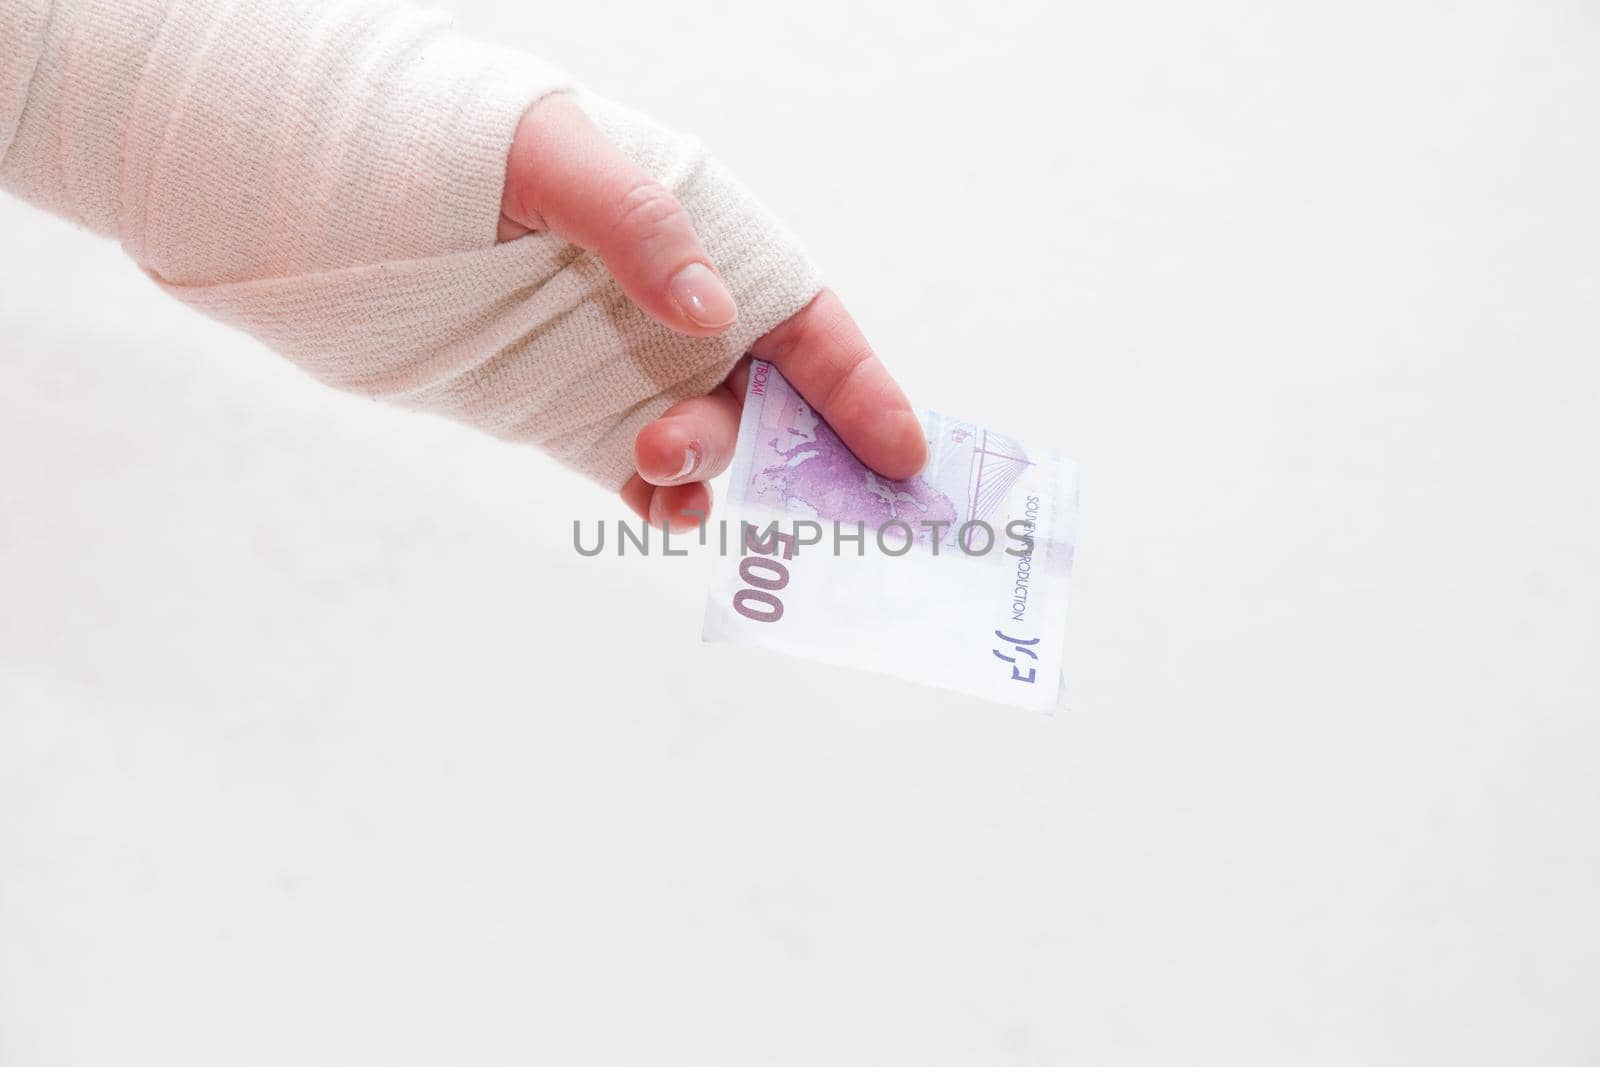 bandaged female hand holds a 500 euro bill